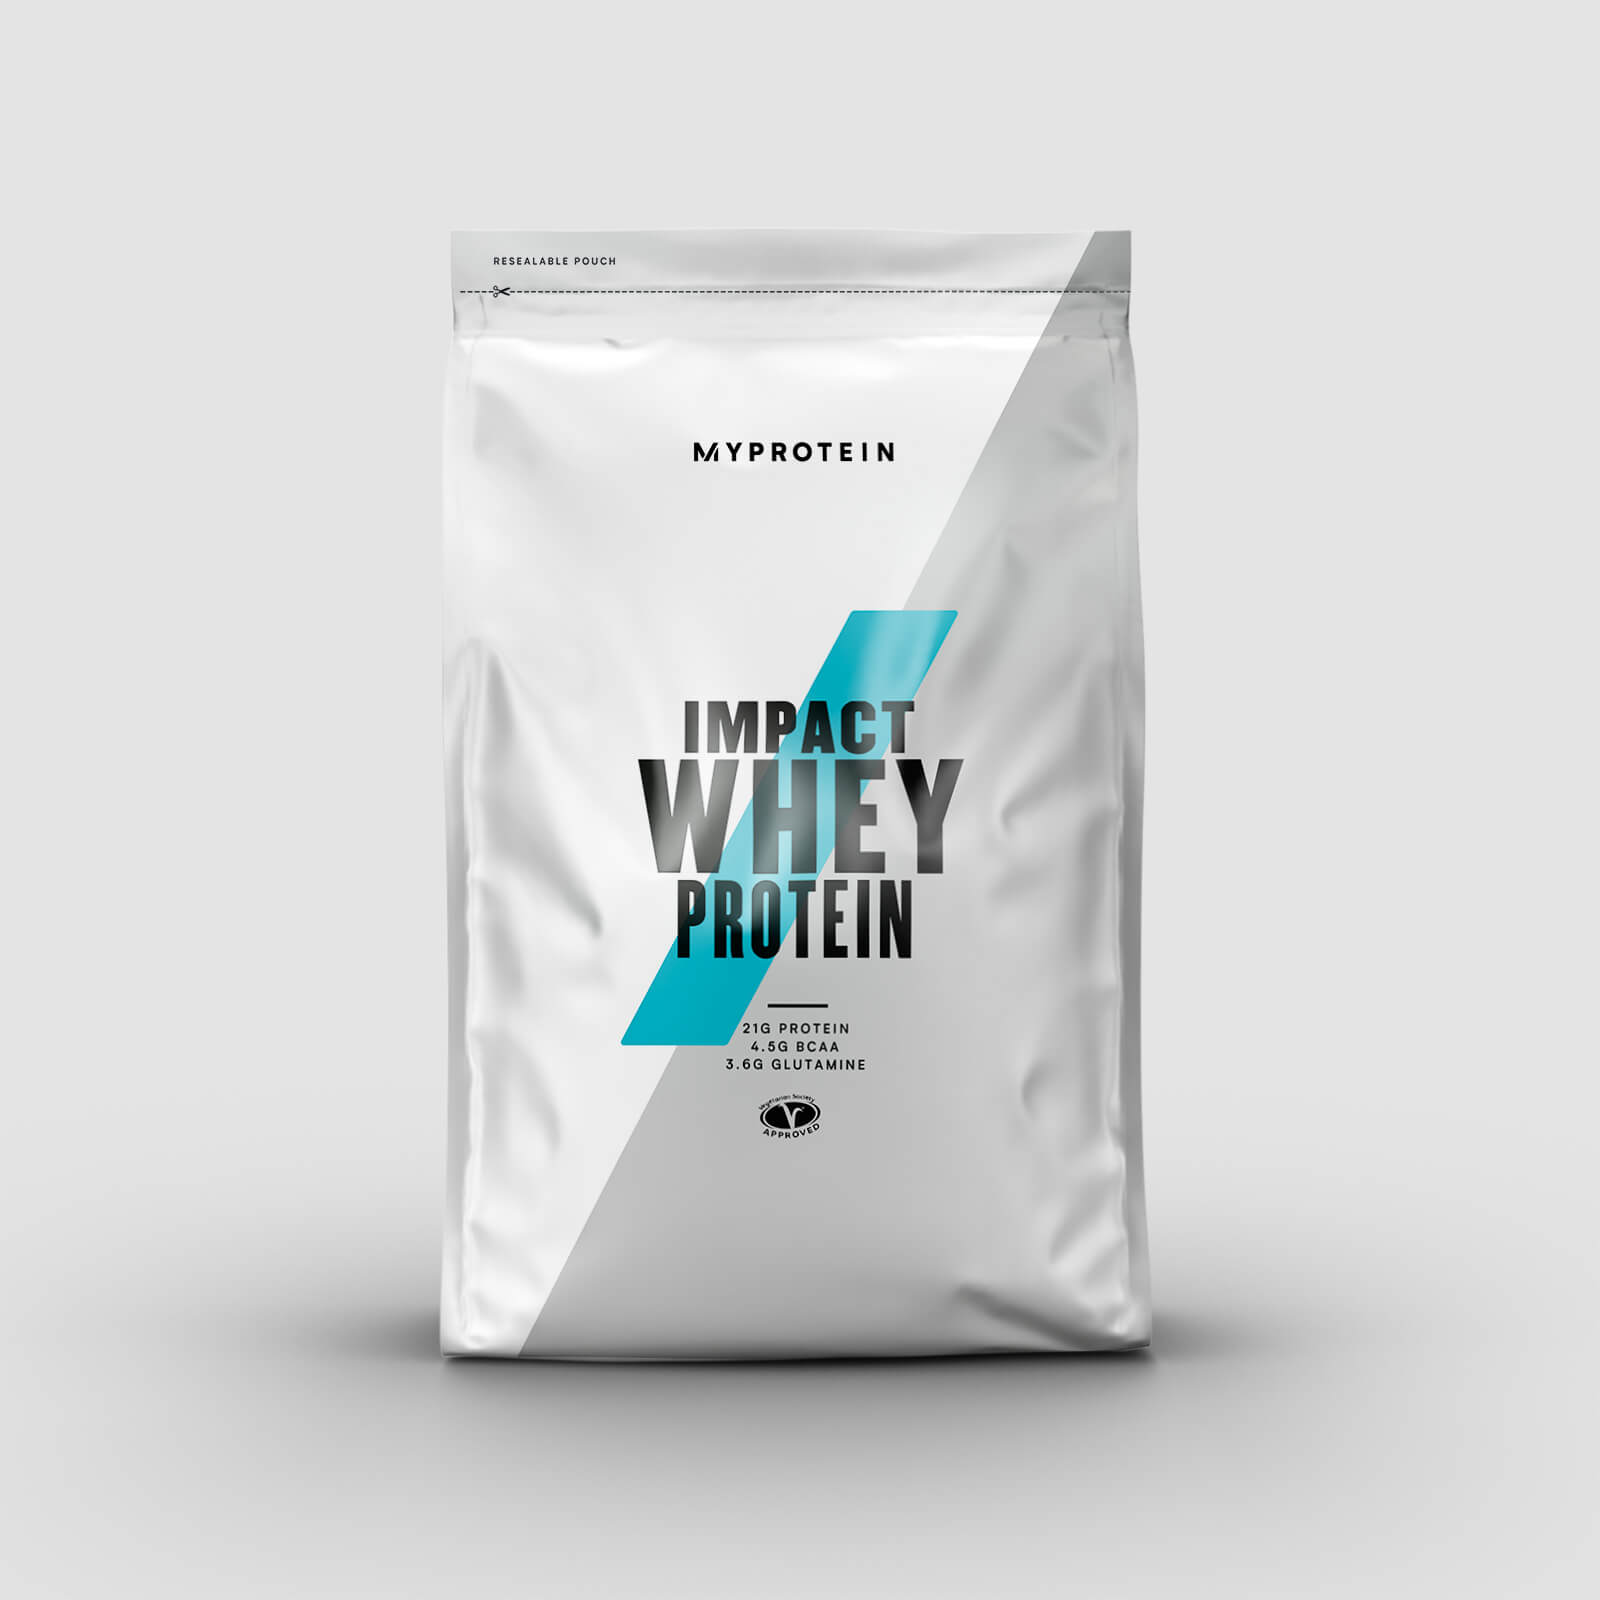 Myprotein Vassleprotein - Impact Whey Protein - 1kg - Ny - Chocolate Stevia